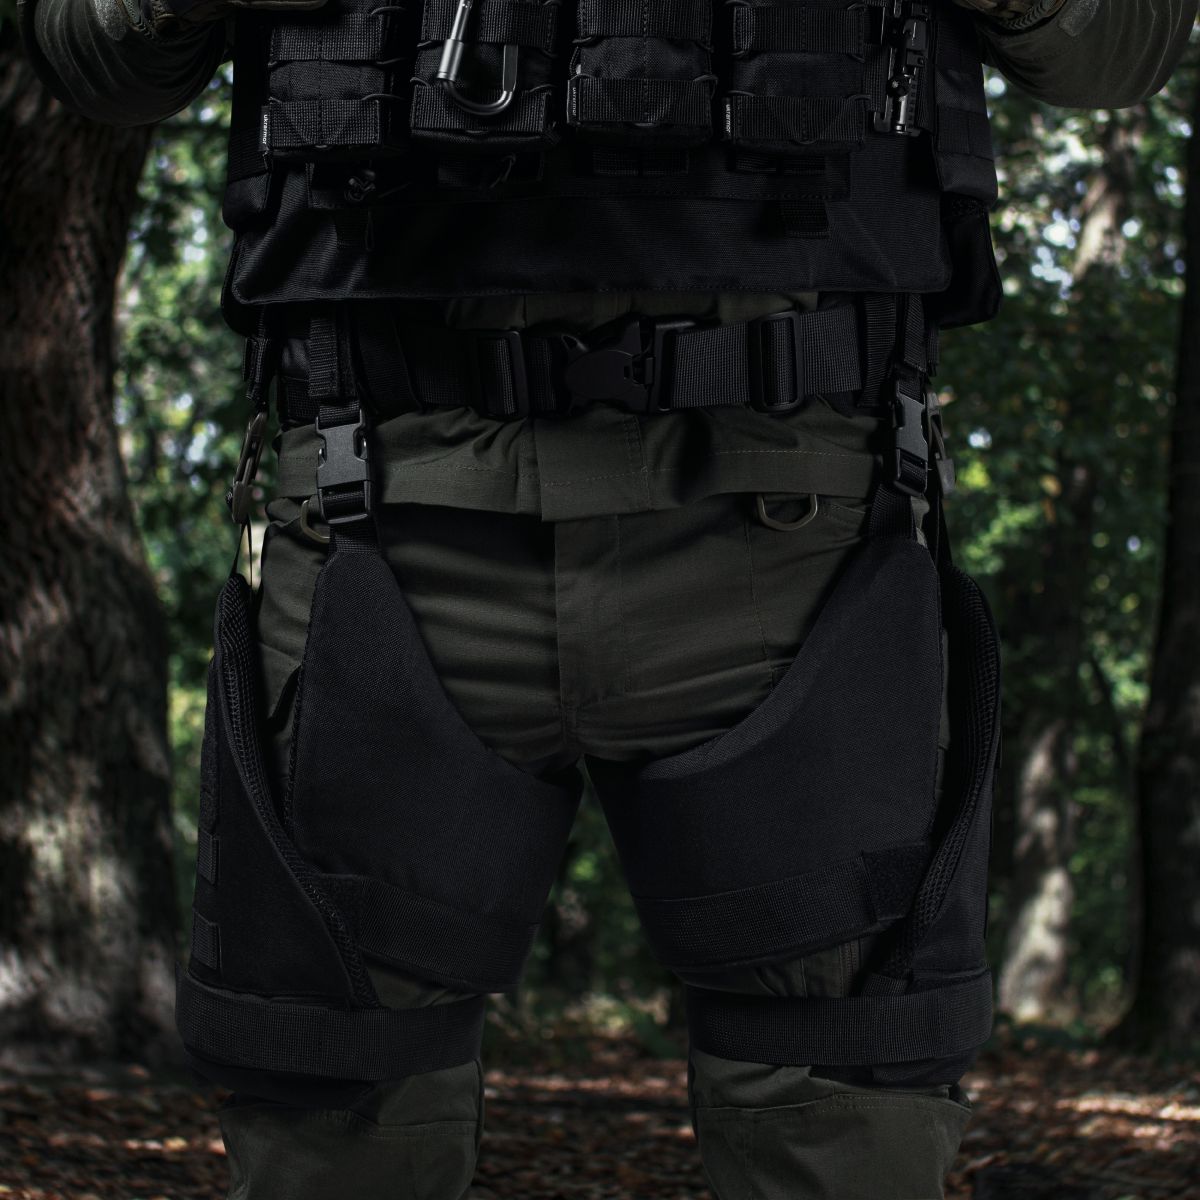 Бронекостюм A.T.A.S. (Advanced Tactical Armor Suit) Level II. Класс защиты – 2. Чорний. L/XL 10